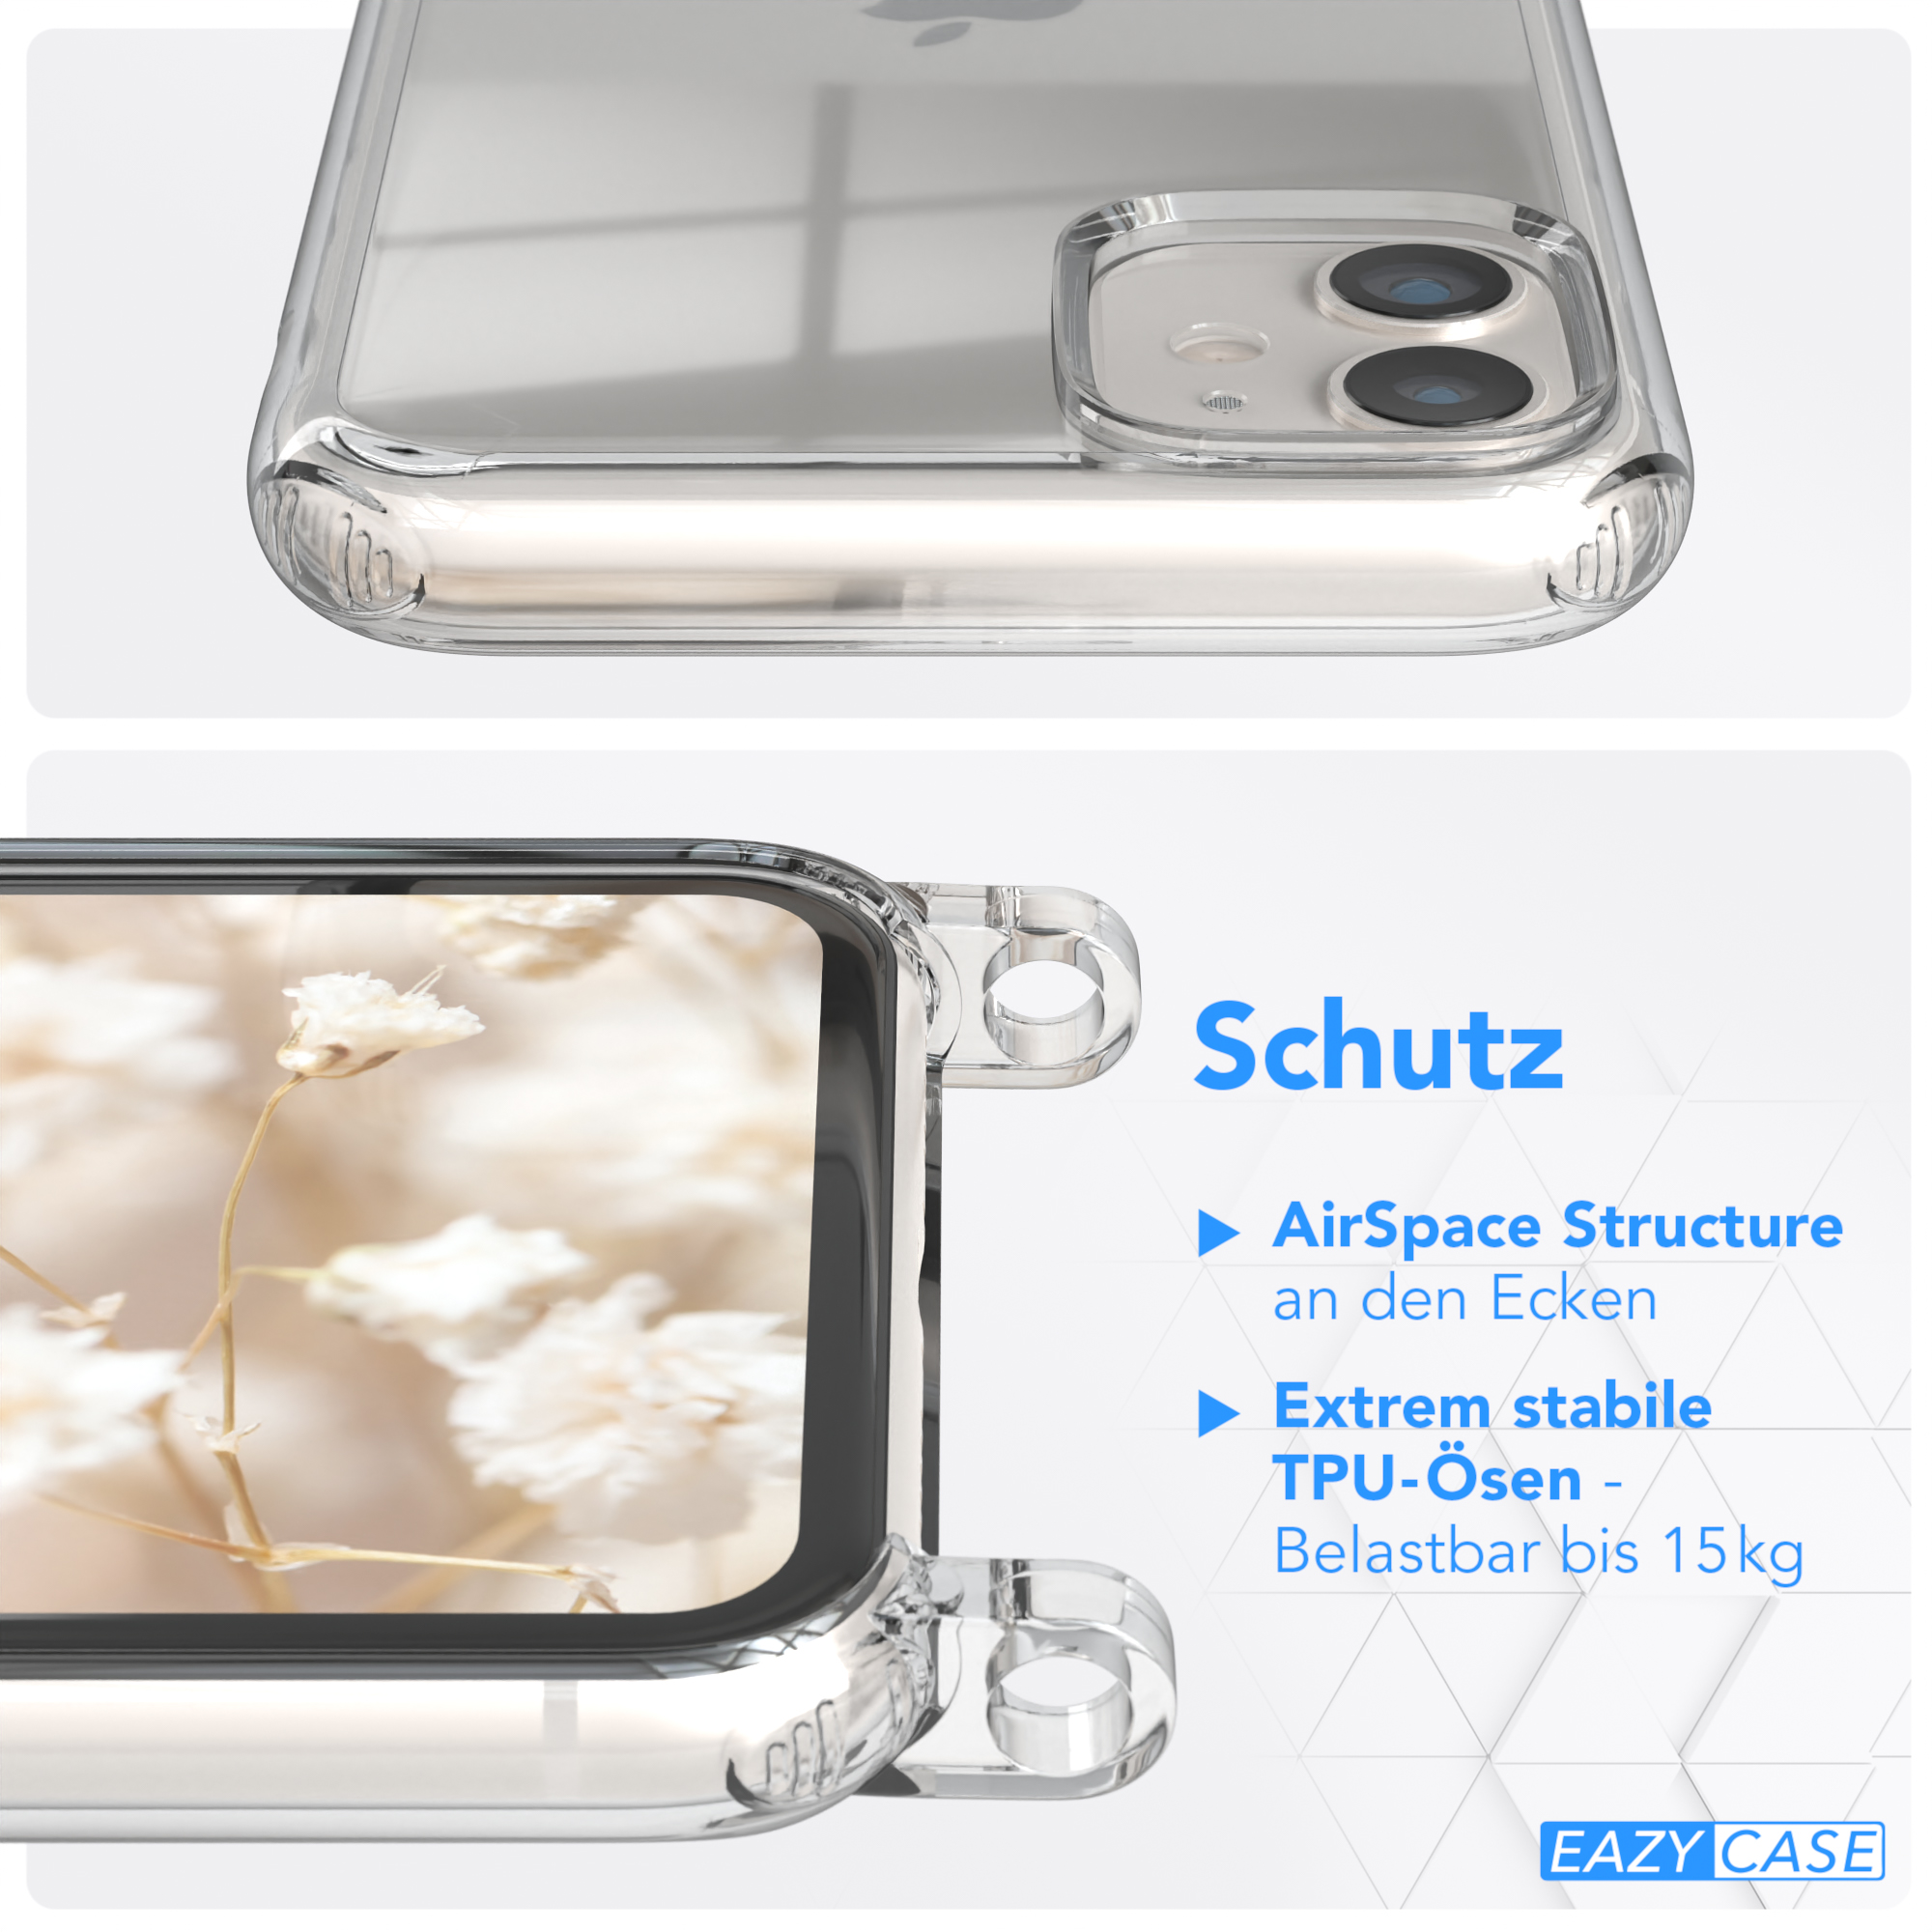 mit Kordel Rot Style, Transparente 11, / Umhängetasche, Apple, iPhone Handyhülle EAZY CASE Braun Boho